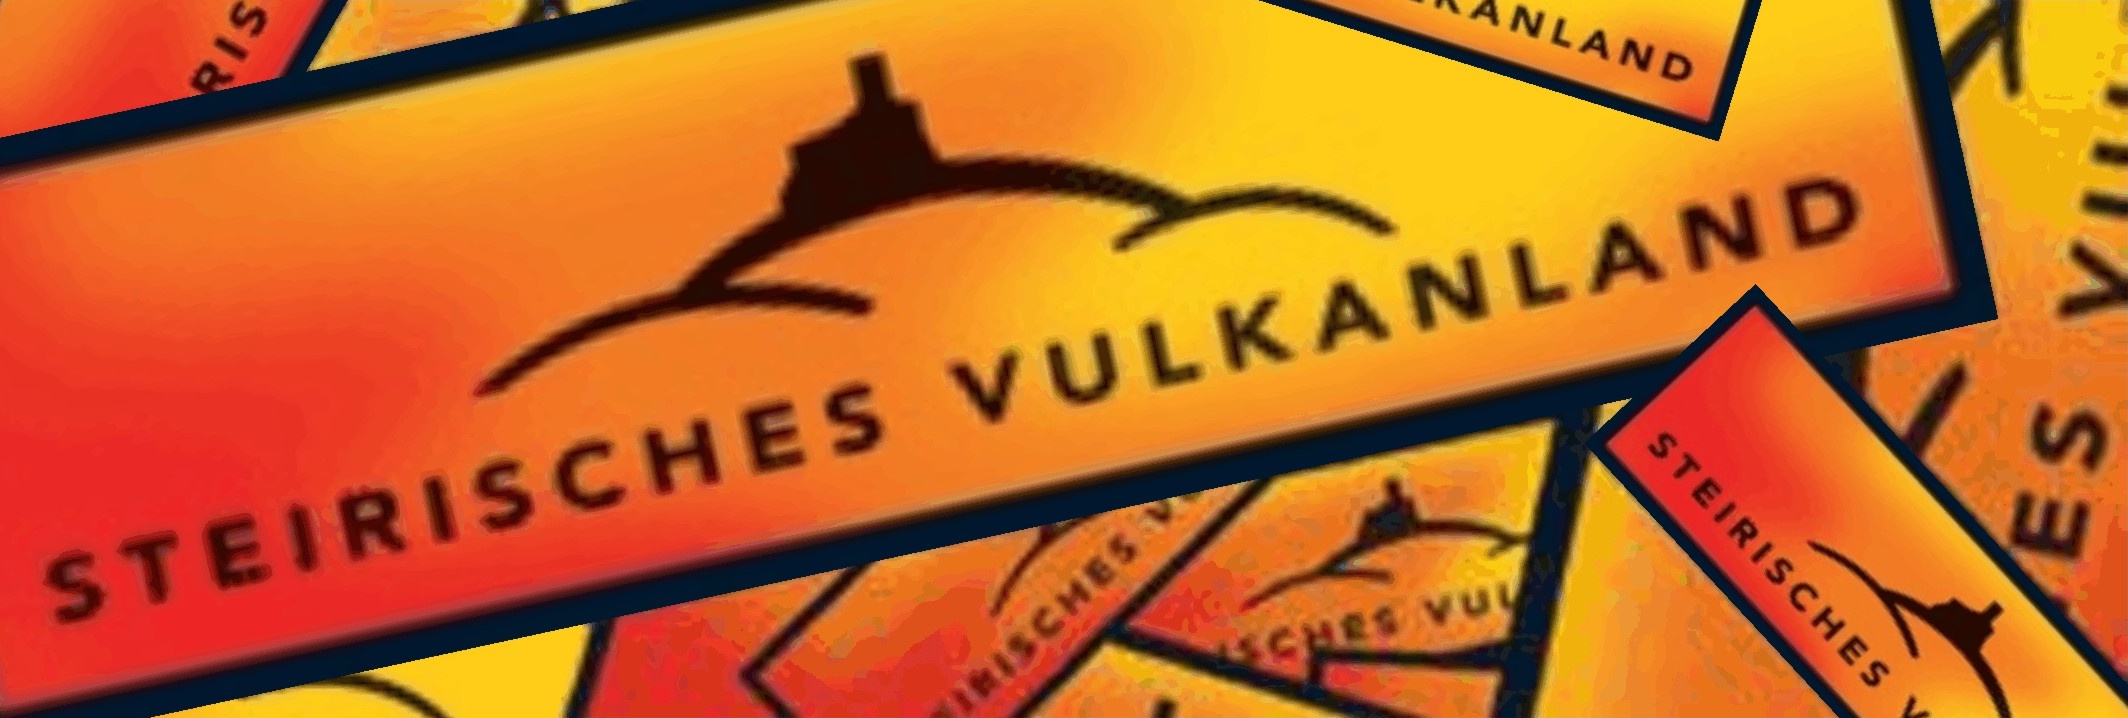 logo steierisches Vulkanland 